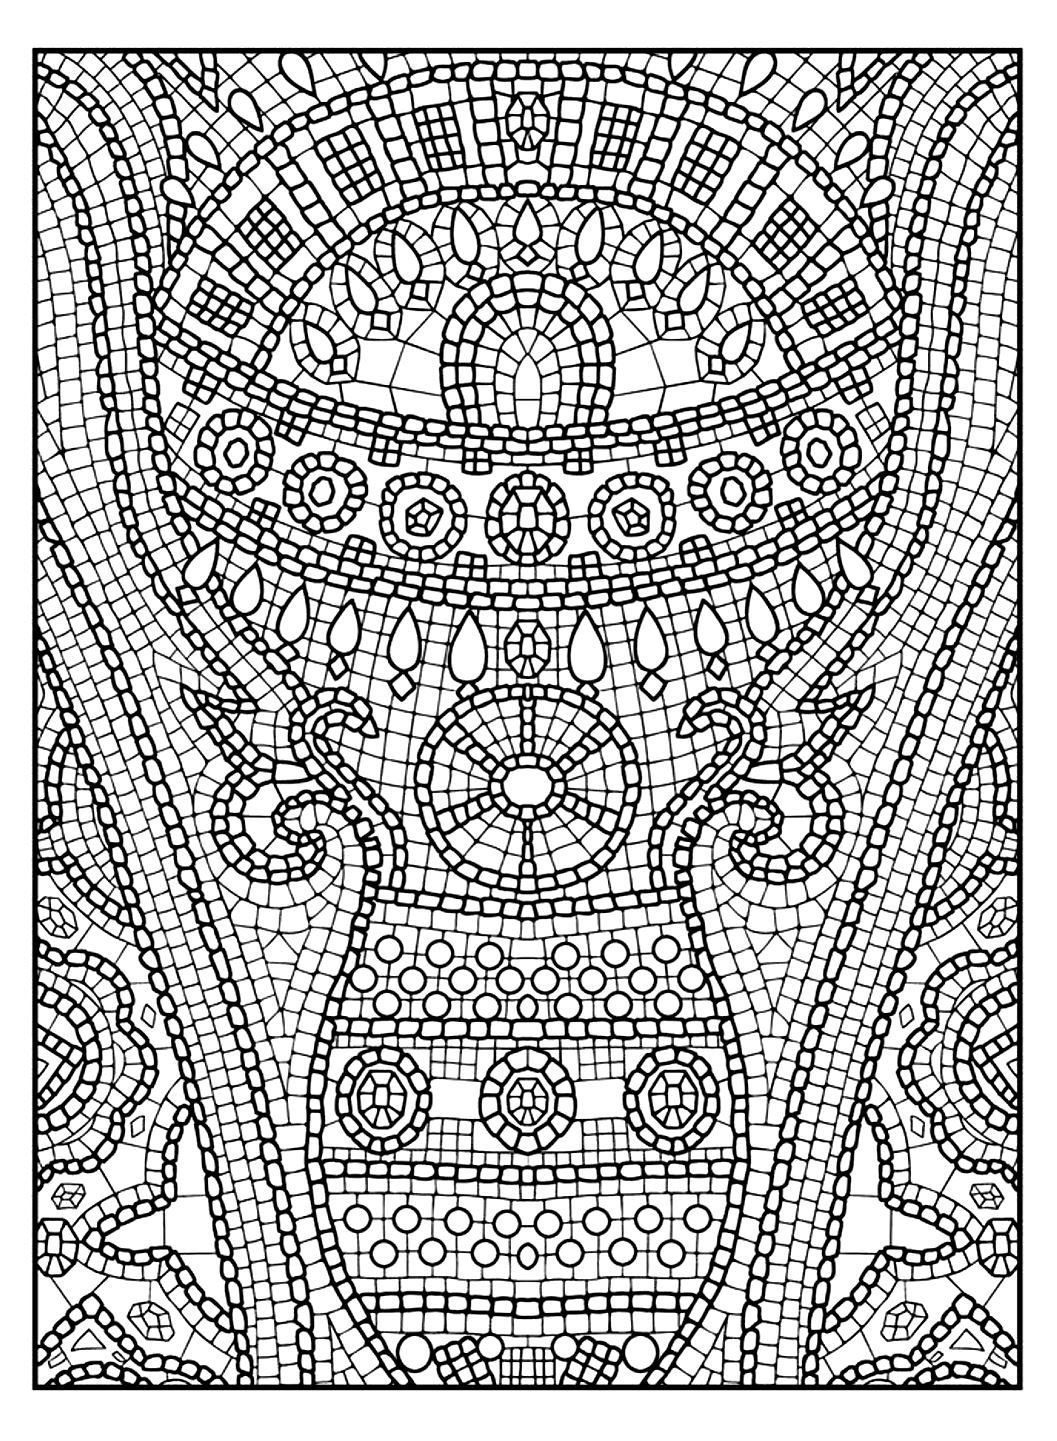 Zen anti stress to print - 11 - Image with : Calm down, Mosaic